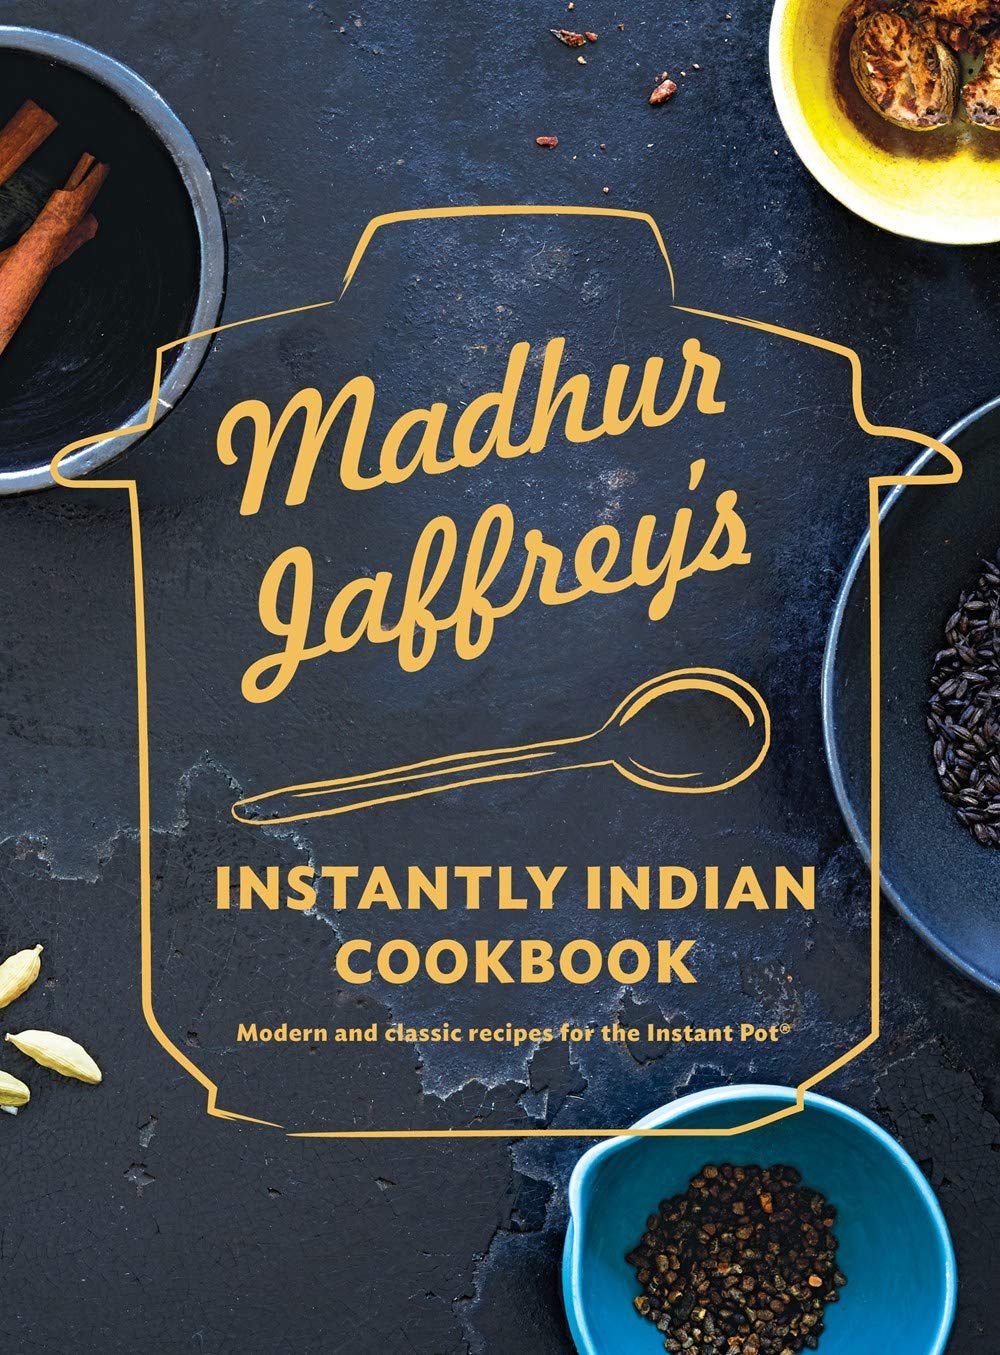 We Found the Best Instant Pot Cookbook